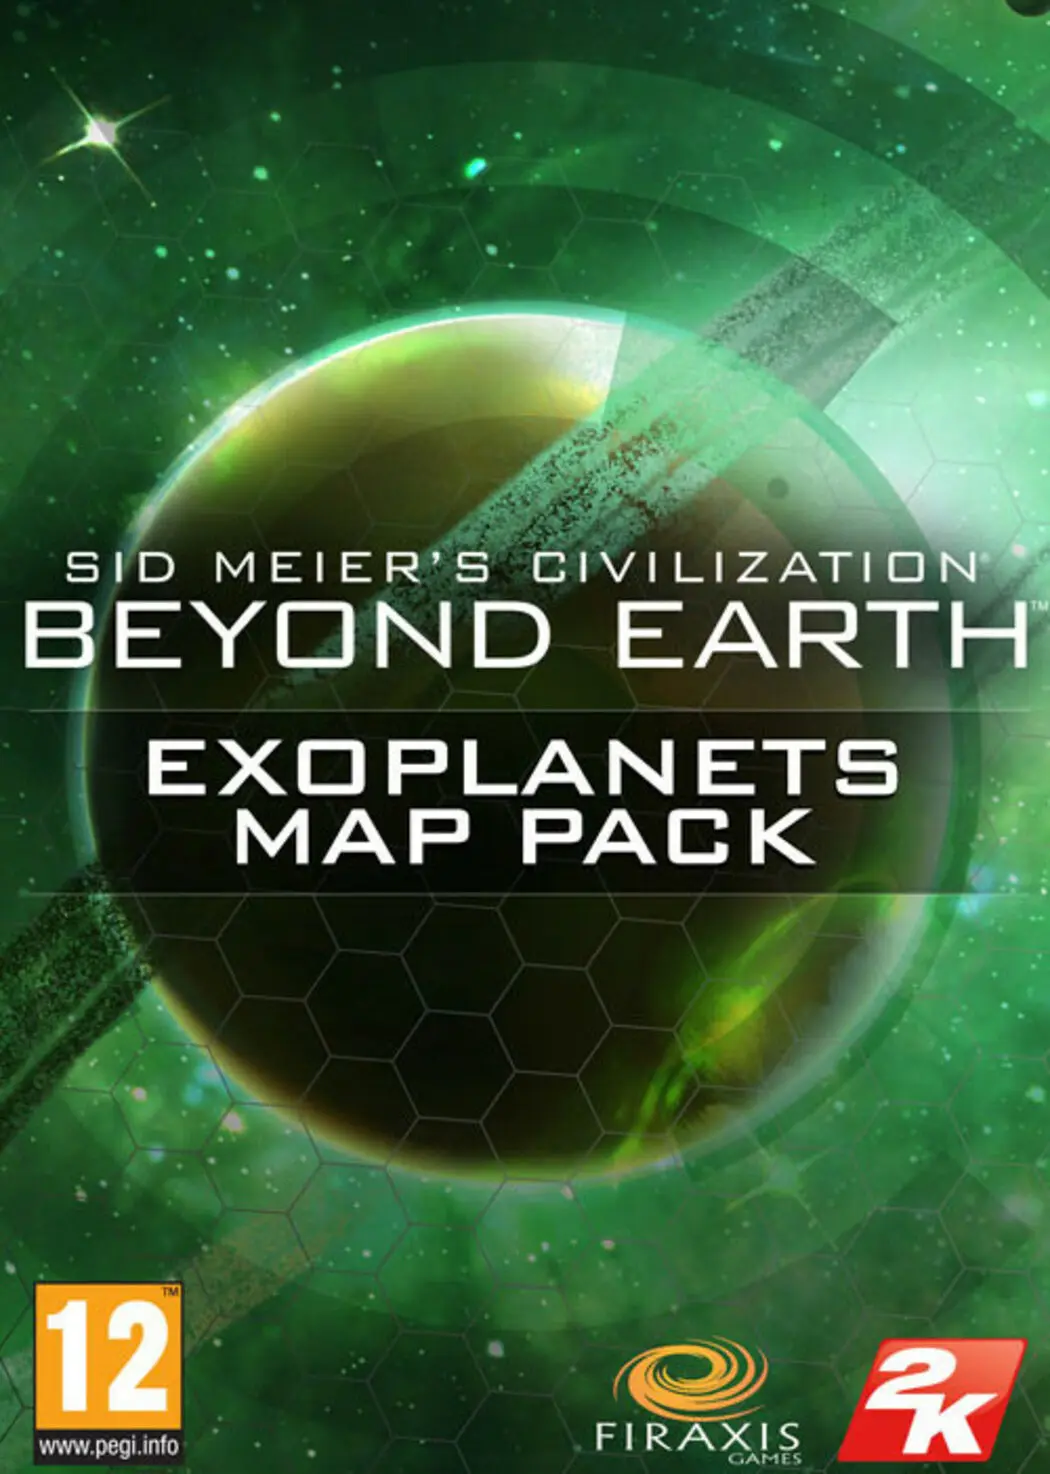 Sid Meier's Civilization: Beyond Earth Exoplanets Map Pack DLC (EU) (PC / Mac / Linux) - Steam - Digital Code